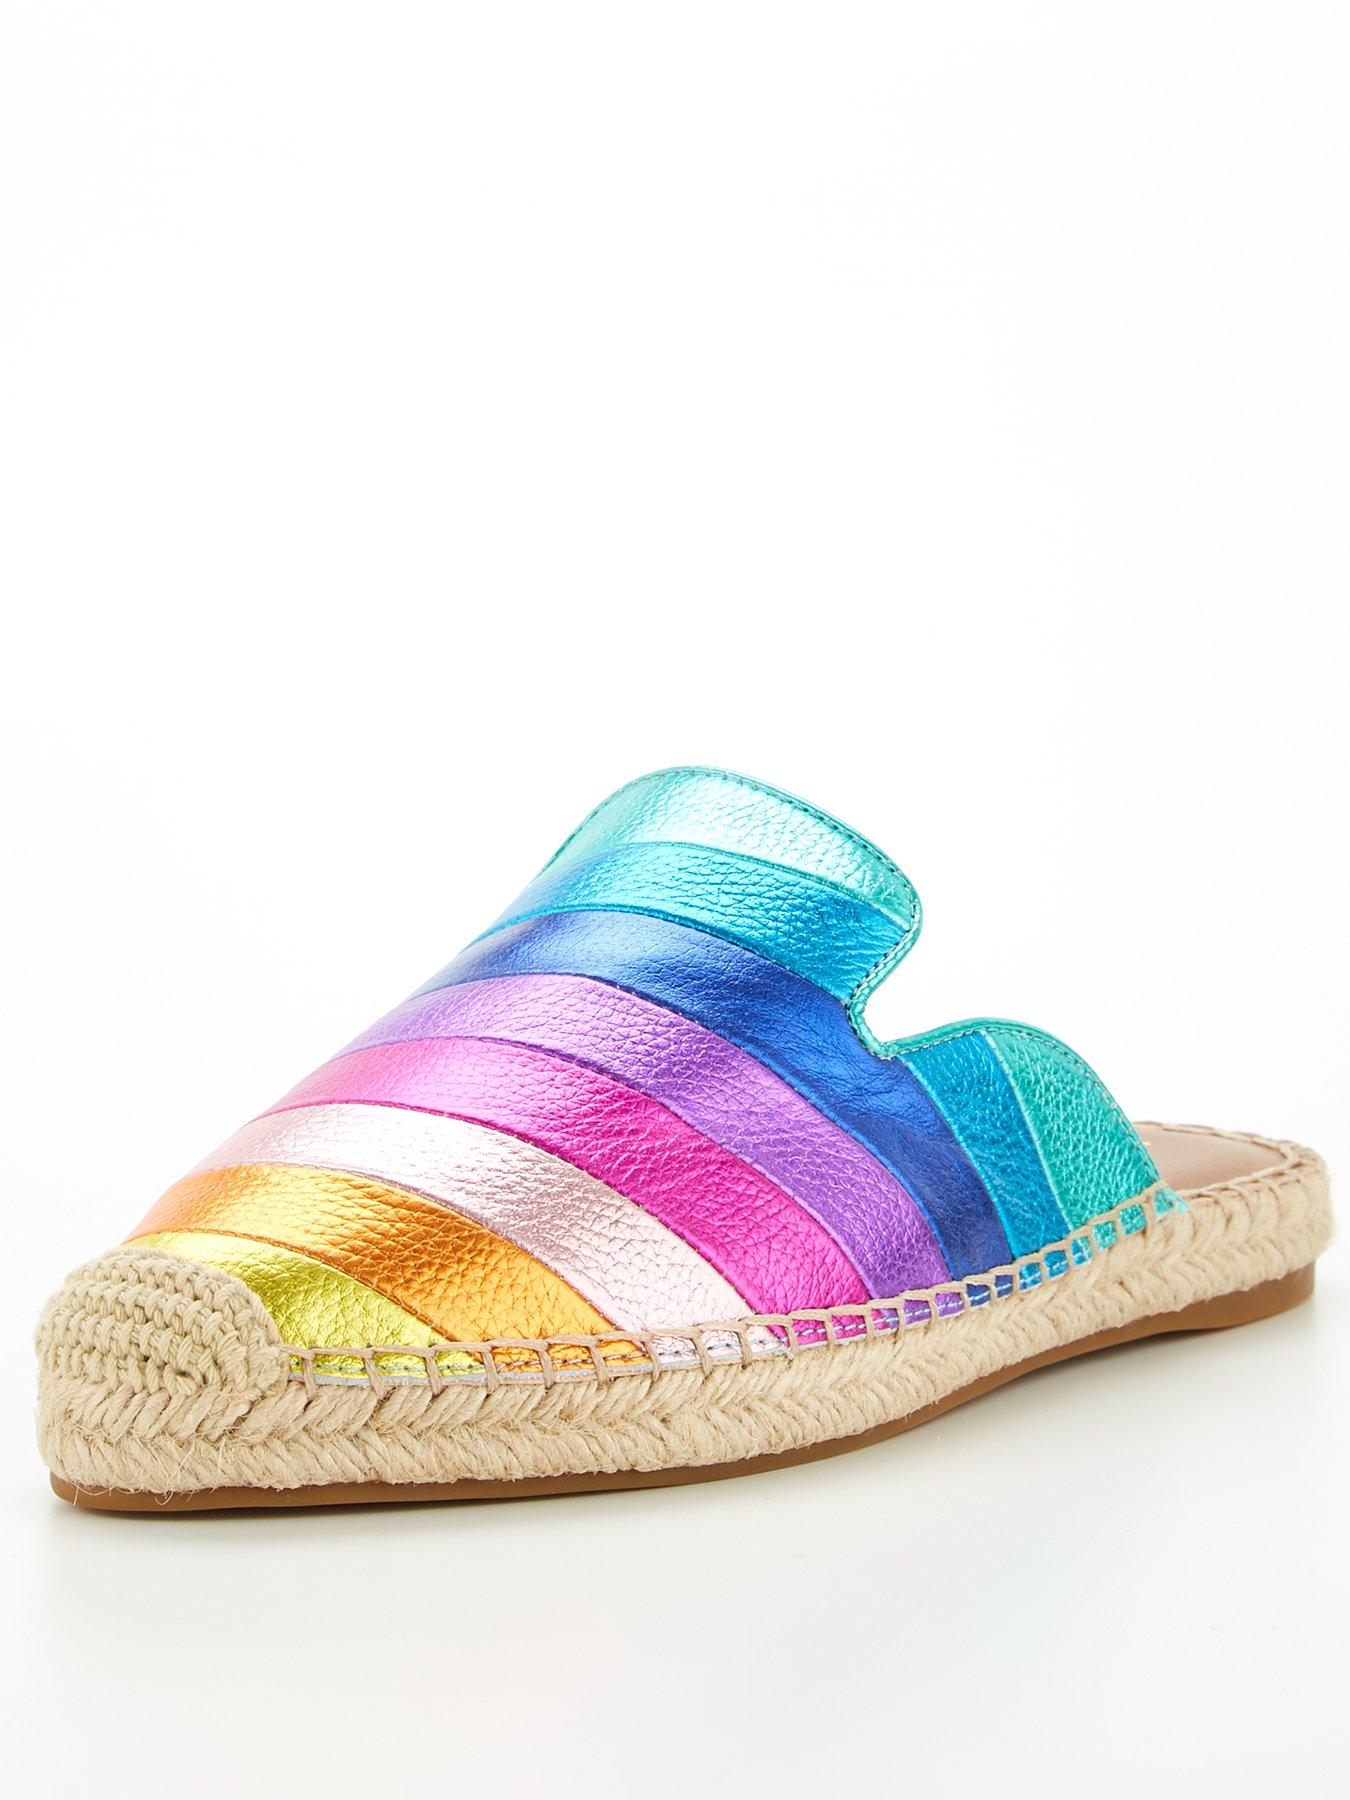 KURT GEIGER LONDON Kira Rainbow Flat Shoe - Multi | very.co.uk